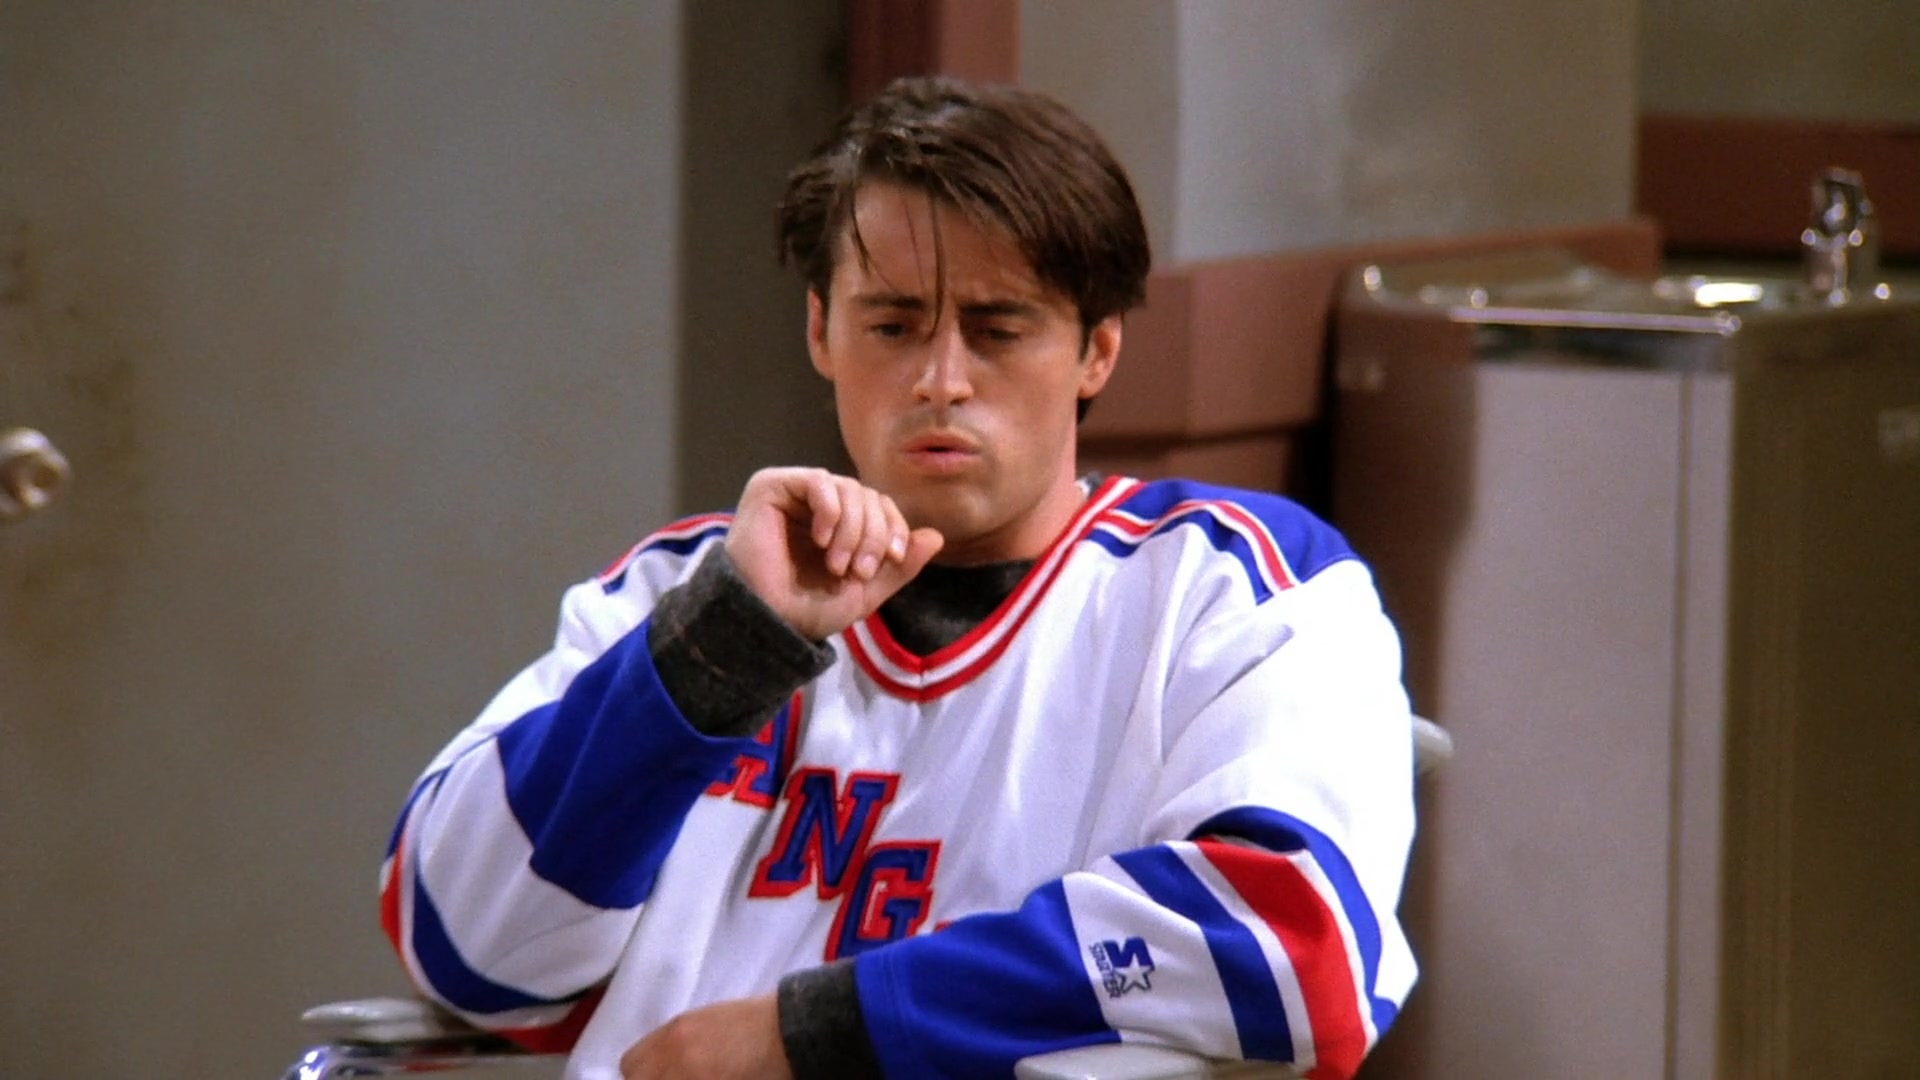 Starter New York Rangers Jersey Worn by Matt LeBlanc (Joey Tribbiani) in Fr...